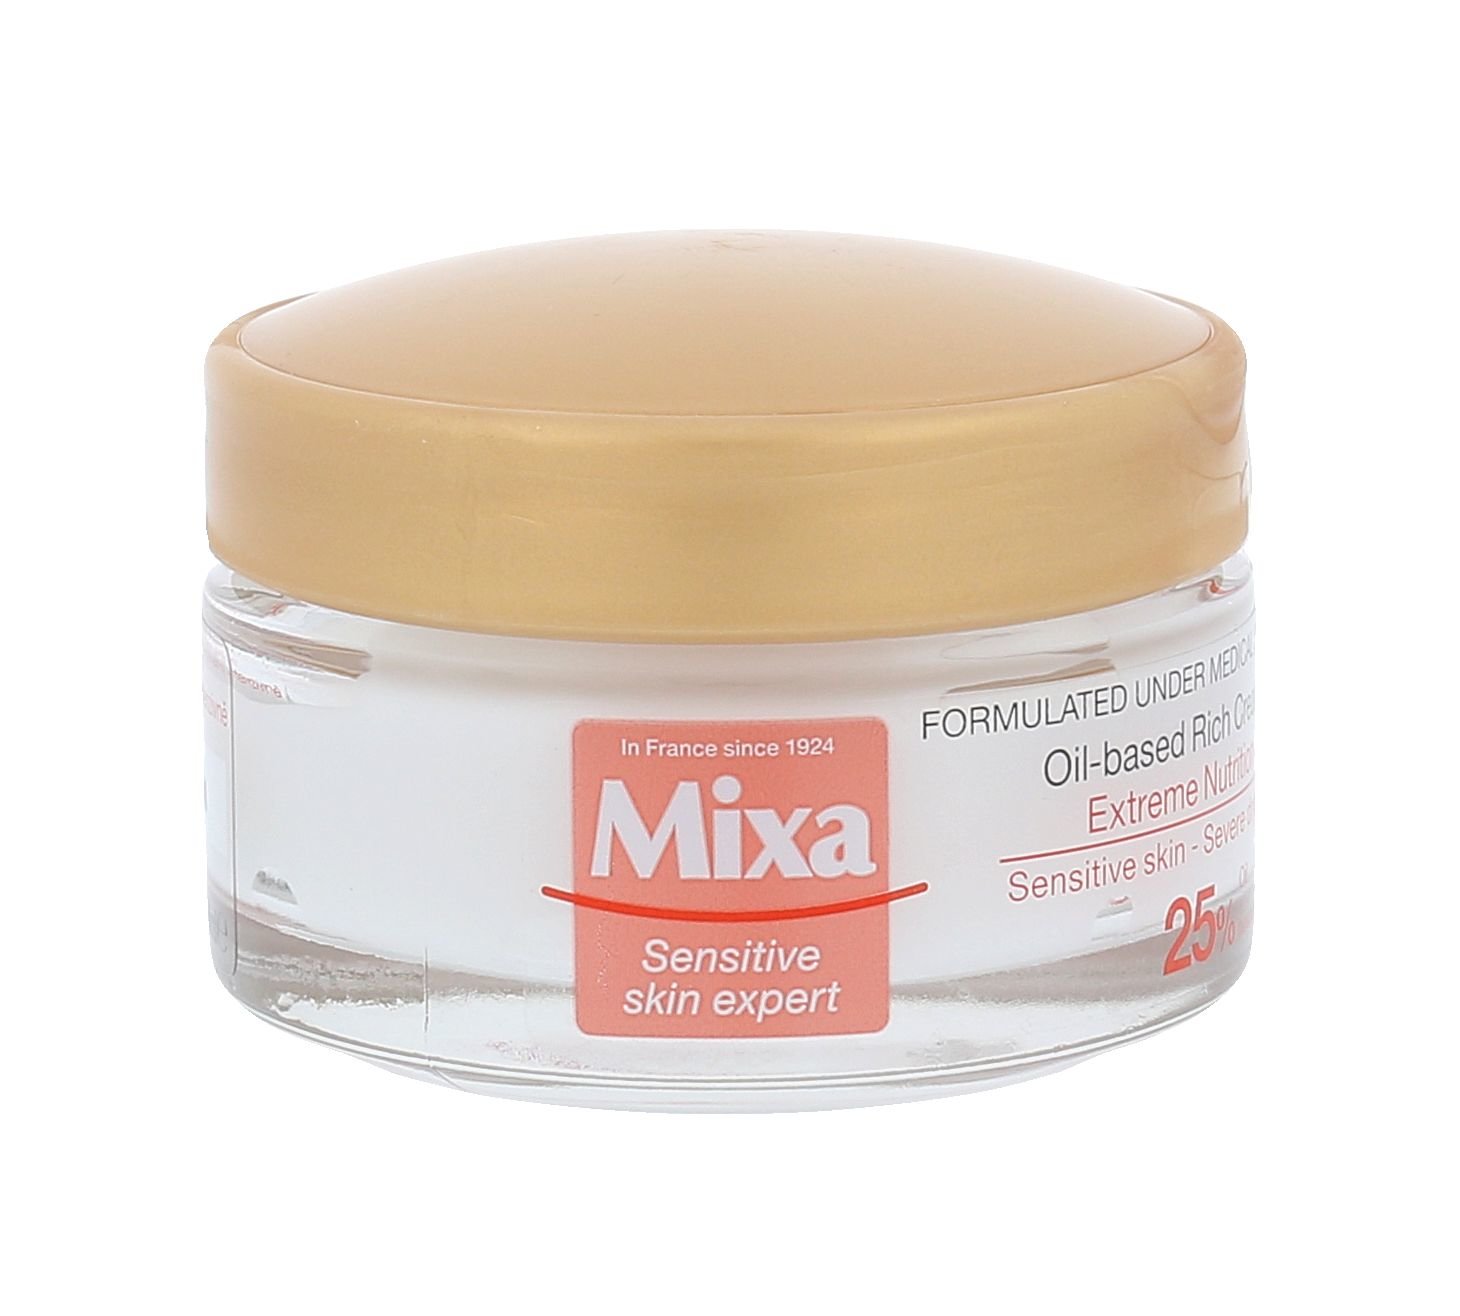 Mixa Oil-based Rich Cream